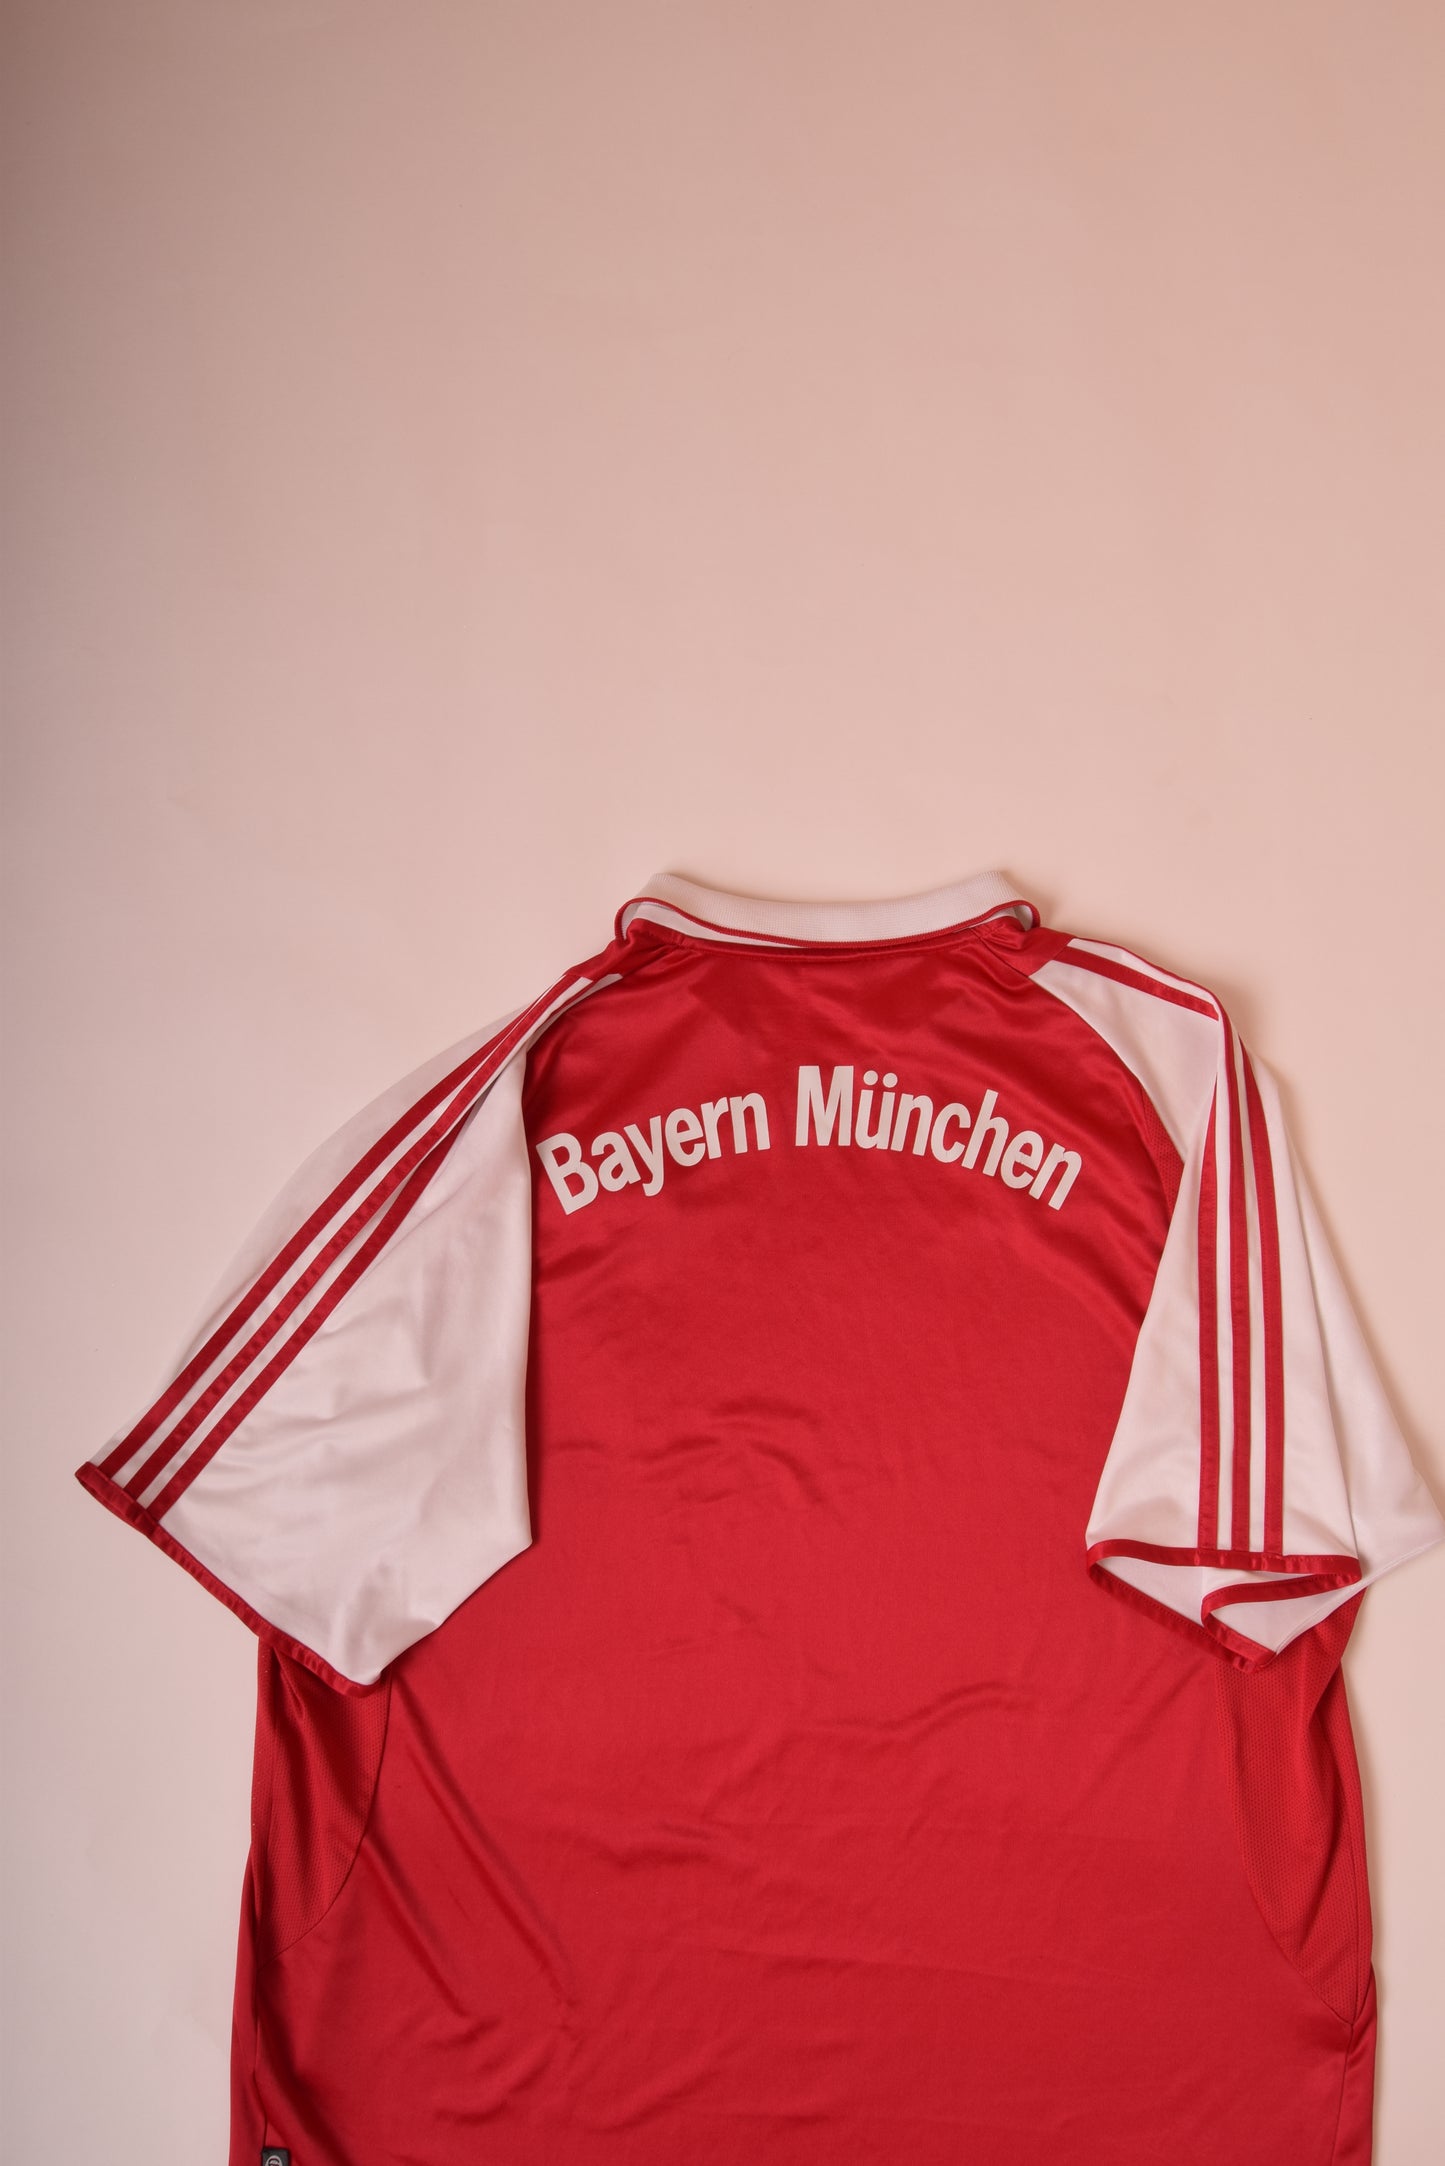 Bayern Munchen Adidas Home Football Shirt 2003 - 2004 Size 2XL 